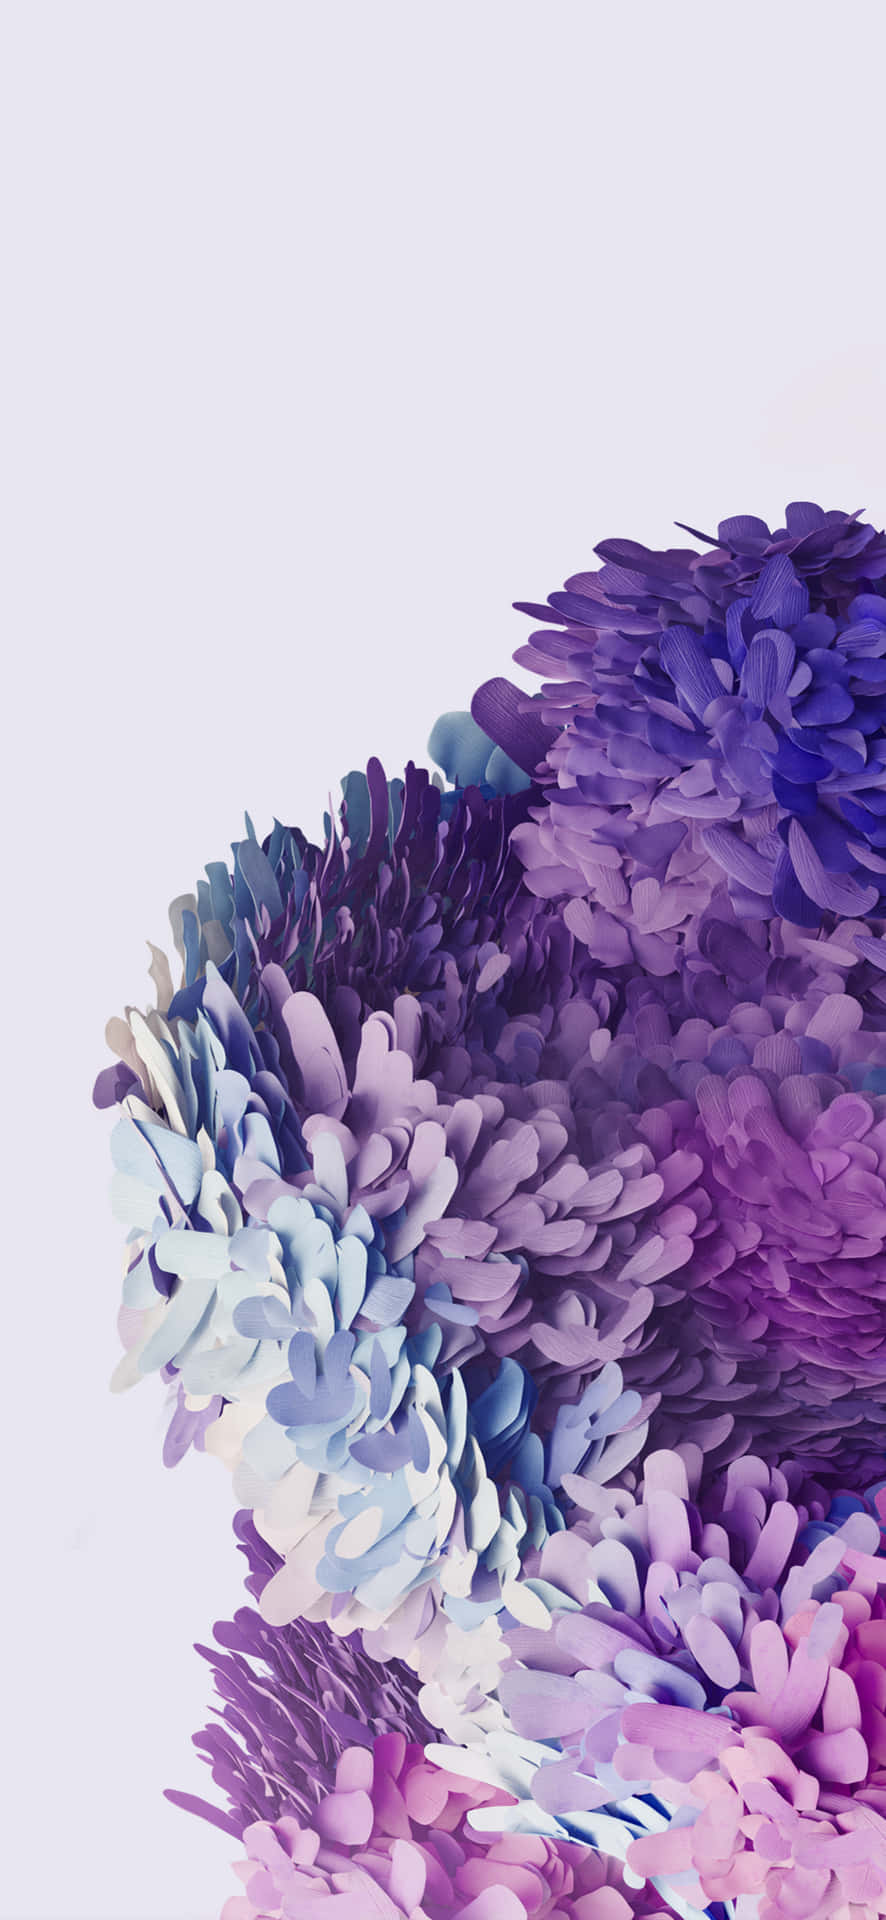 1080x2340 4k Abstract Purple Cloud Wallpaper